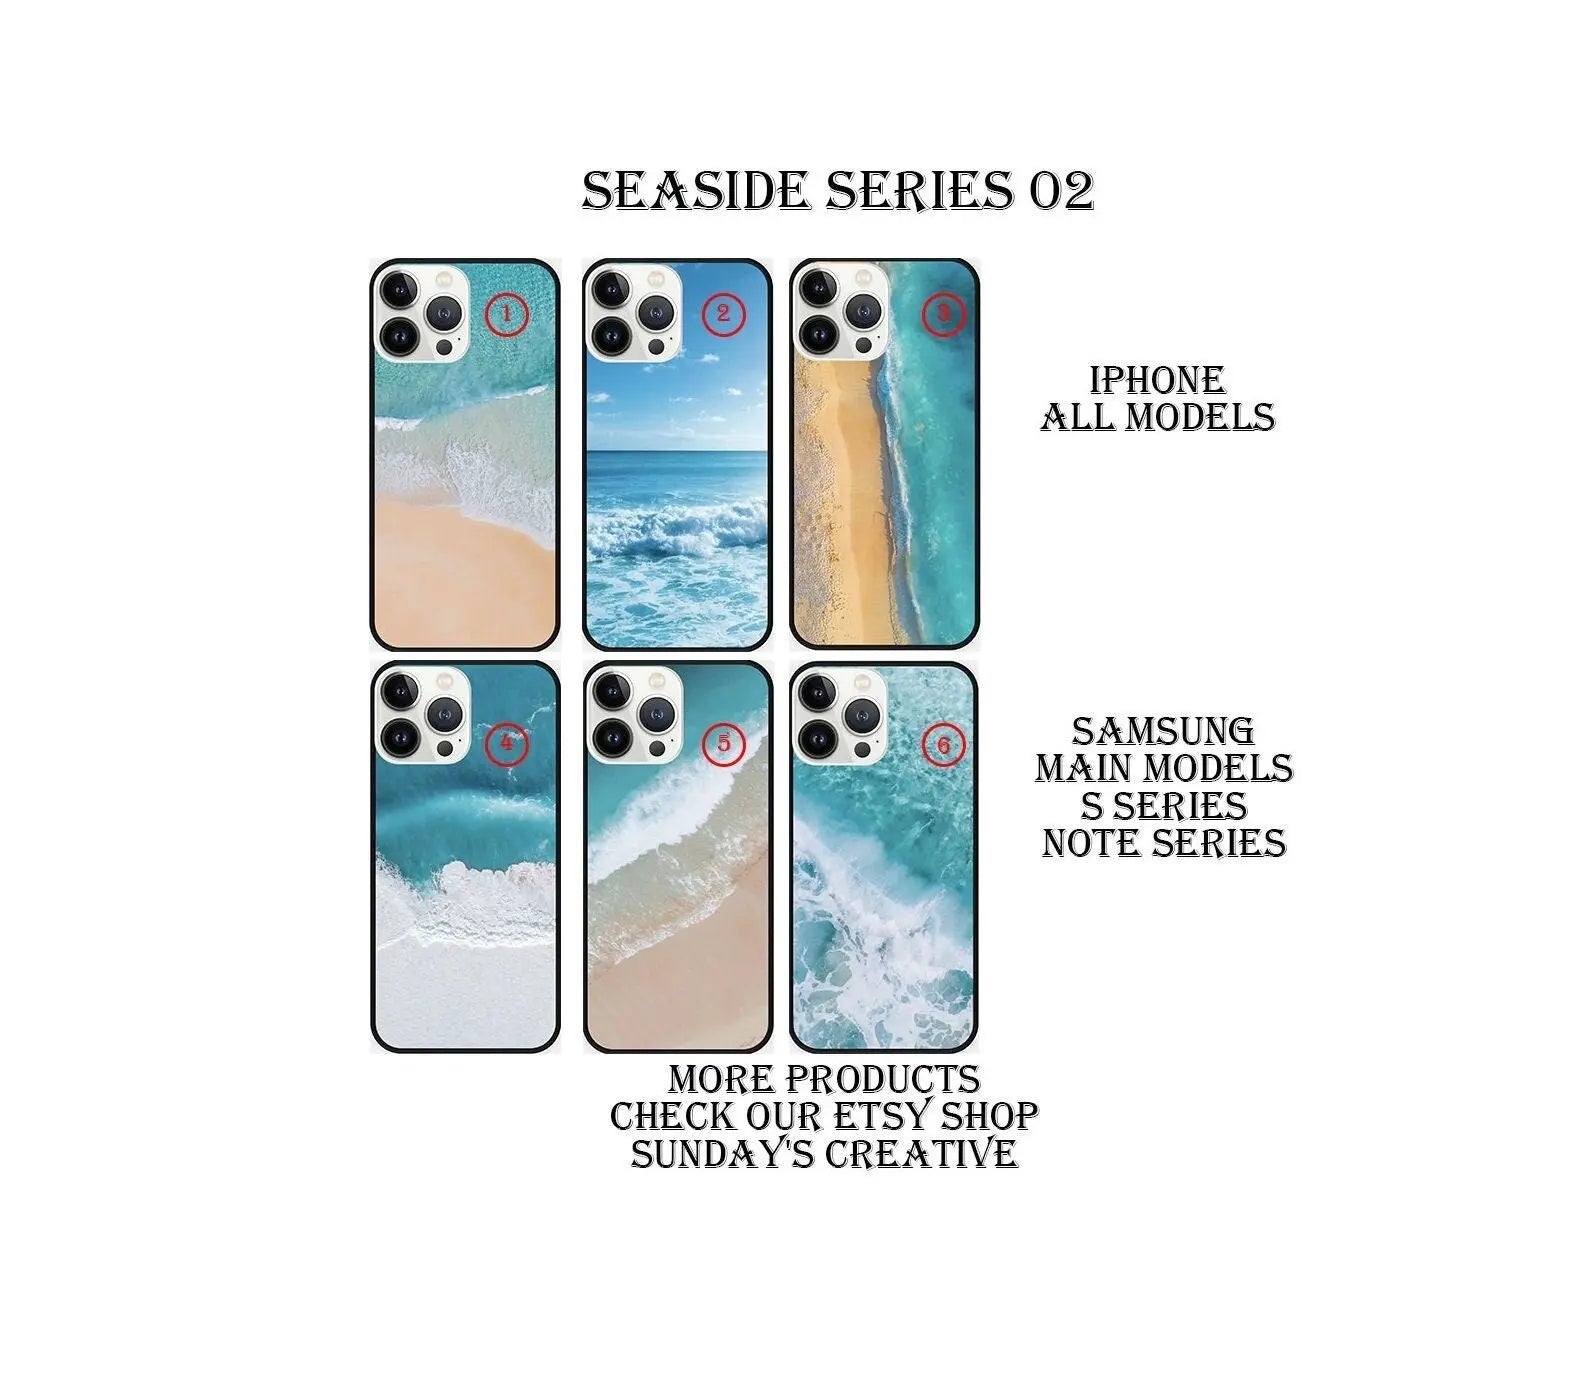 Designed phone cases Seaside series 02 Sunday's Creative